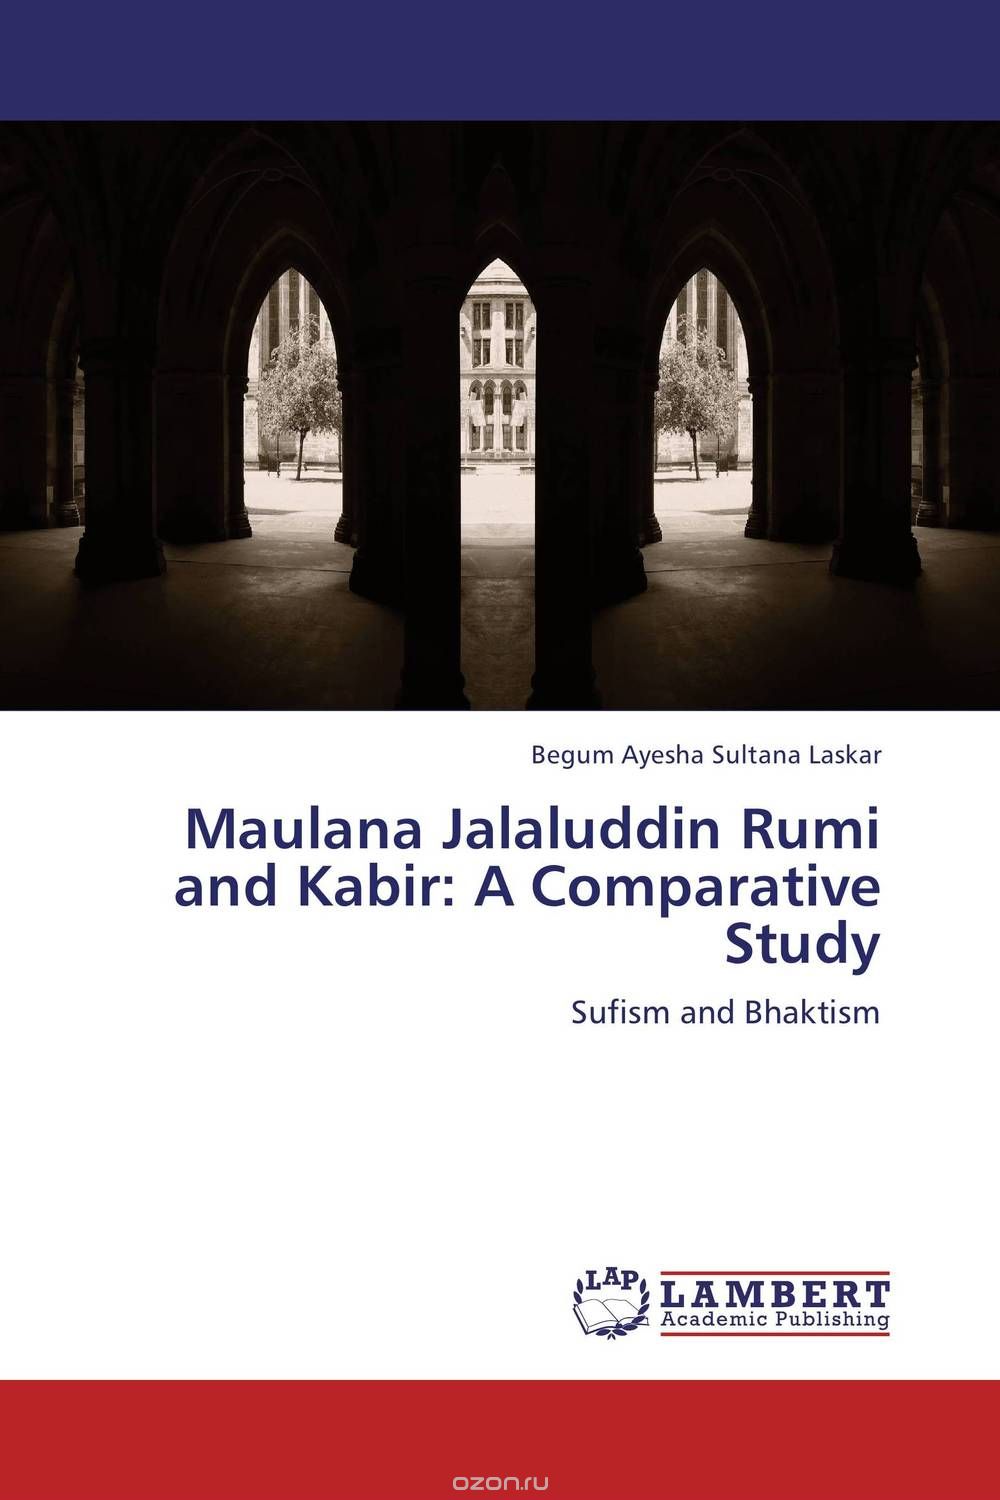 Скачать книгу "Maulana Jalaluddin Rumi and Kabir: A Comparative Study"